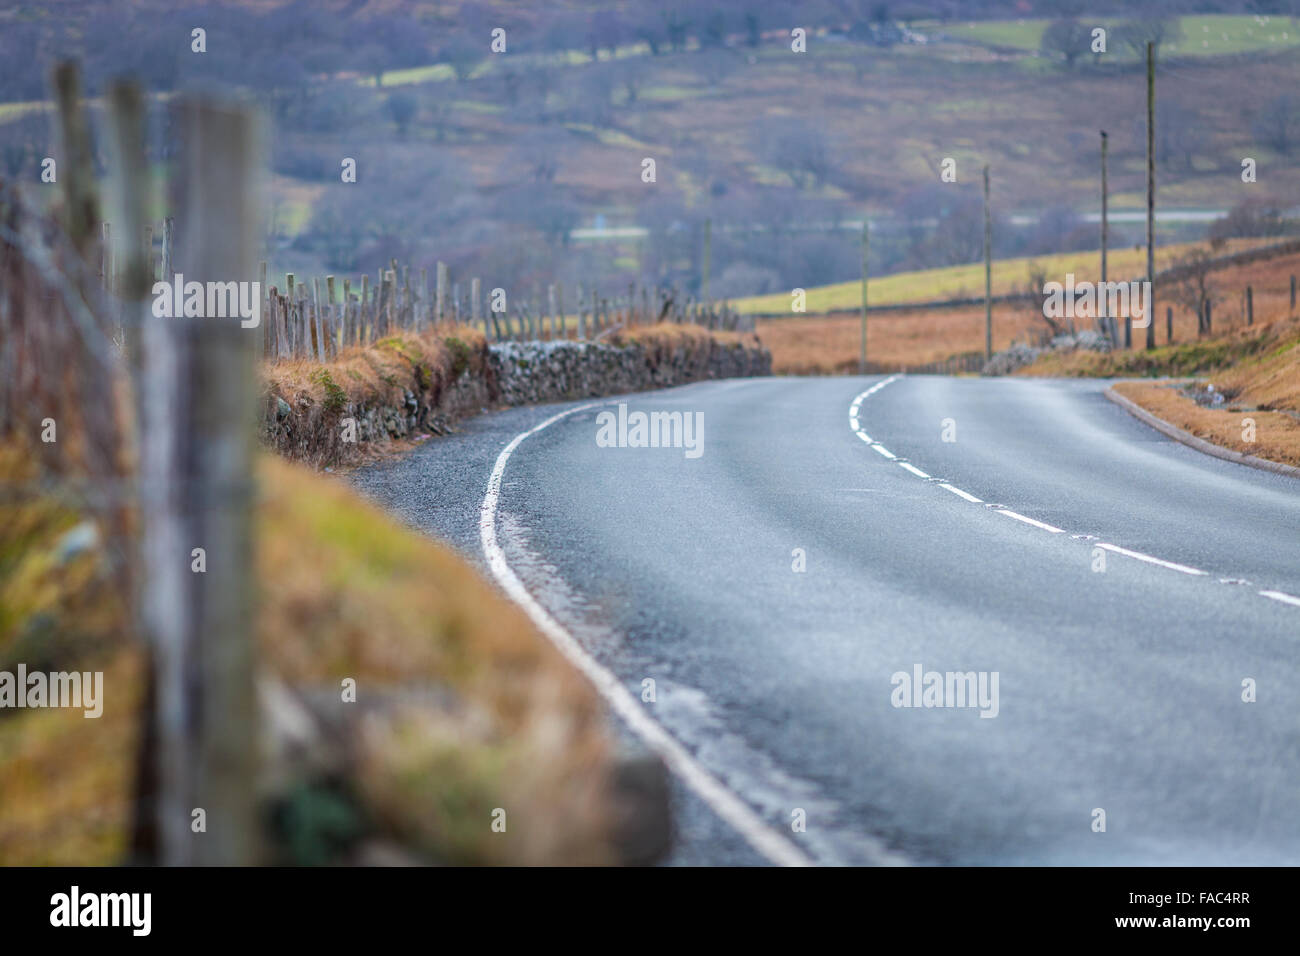 Welsh Asphalt Road with Stony Fence, Blurred Background Stock Photo